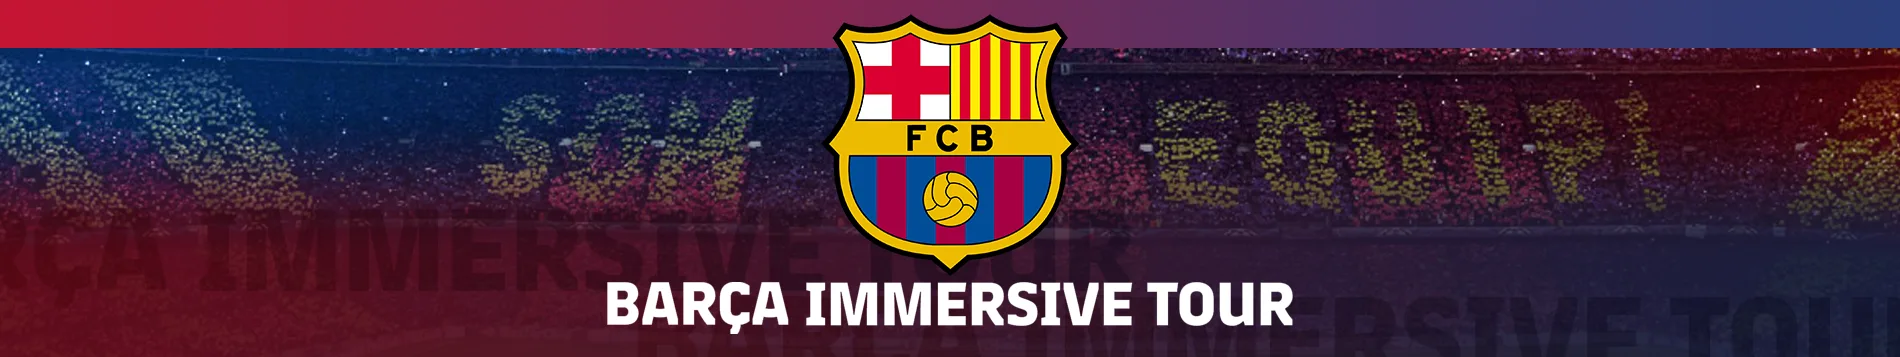 Barça Immersive Tour